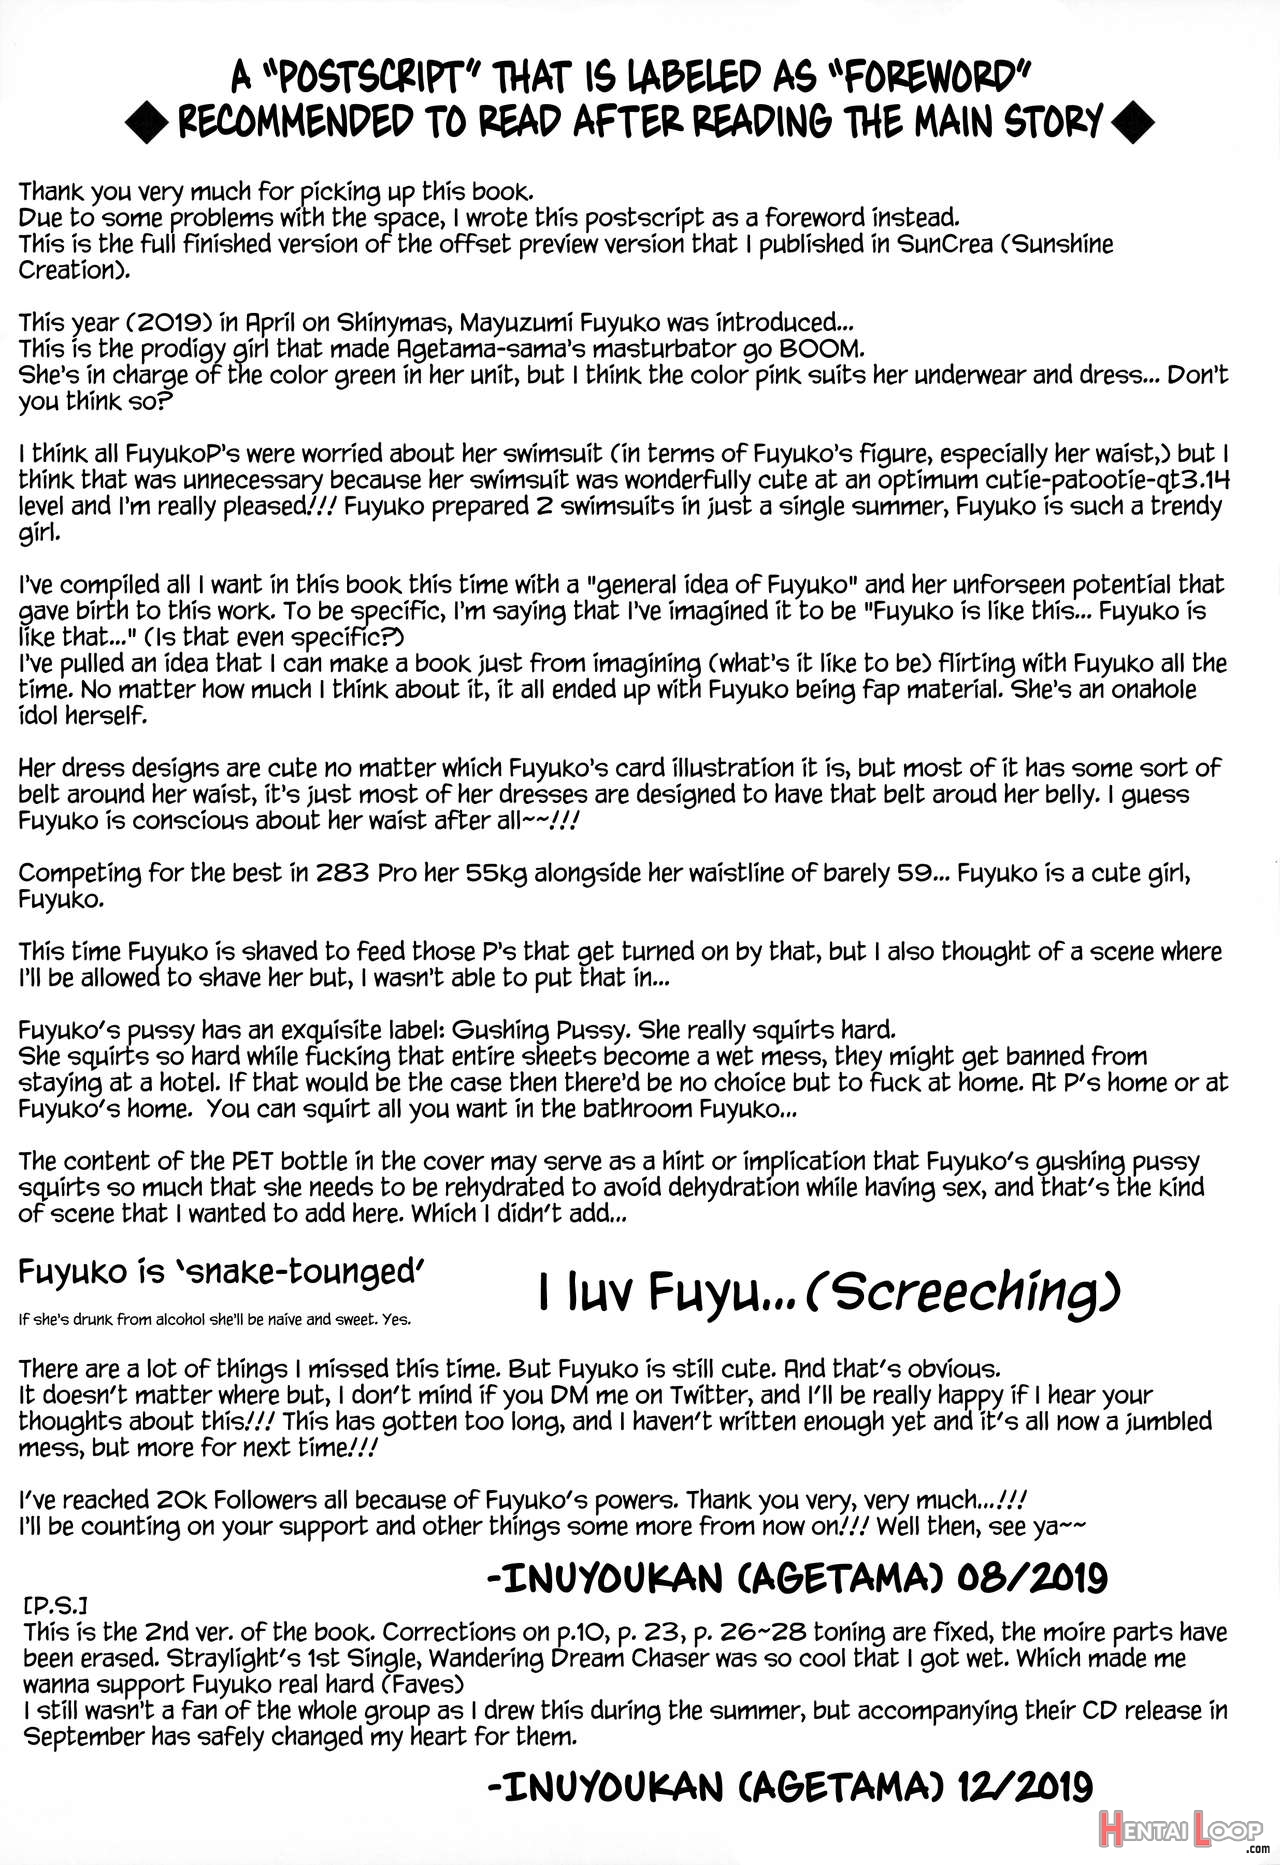 Fetishism + Fuyukoism page 2